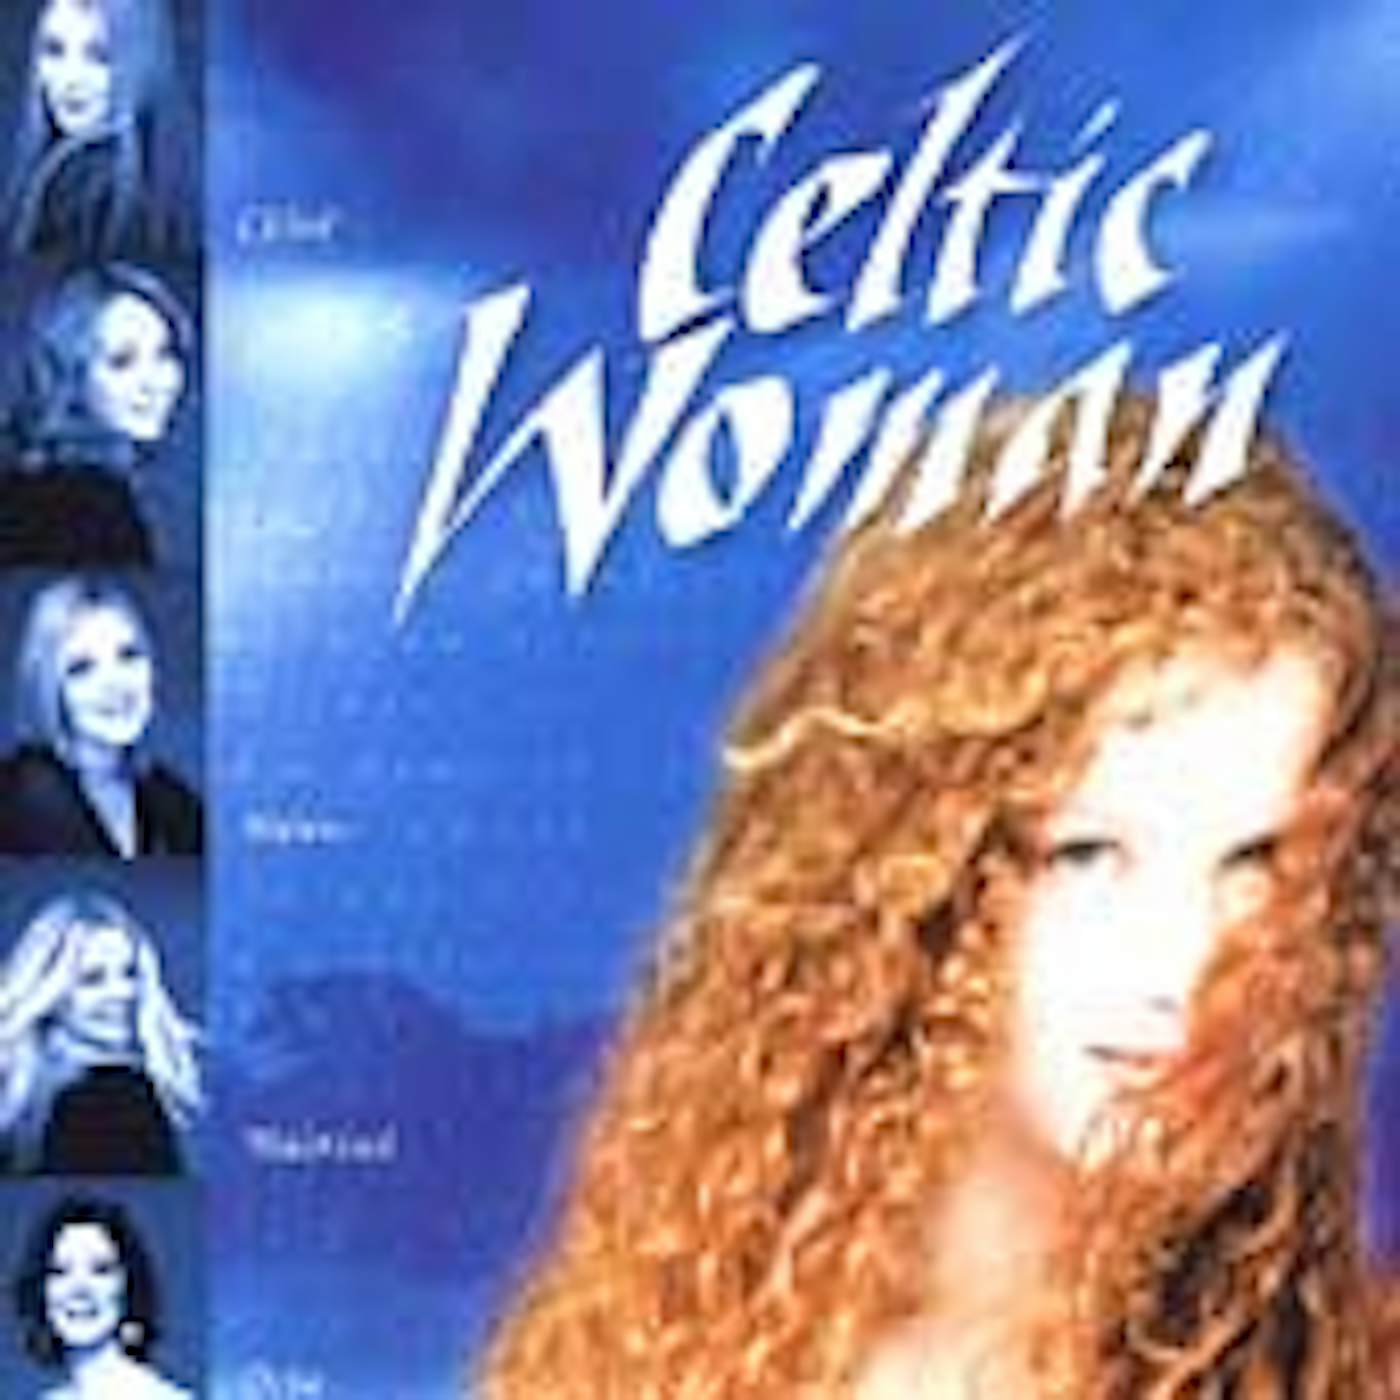 CELTIC WOMAN CD